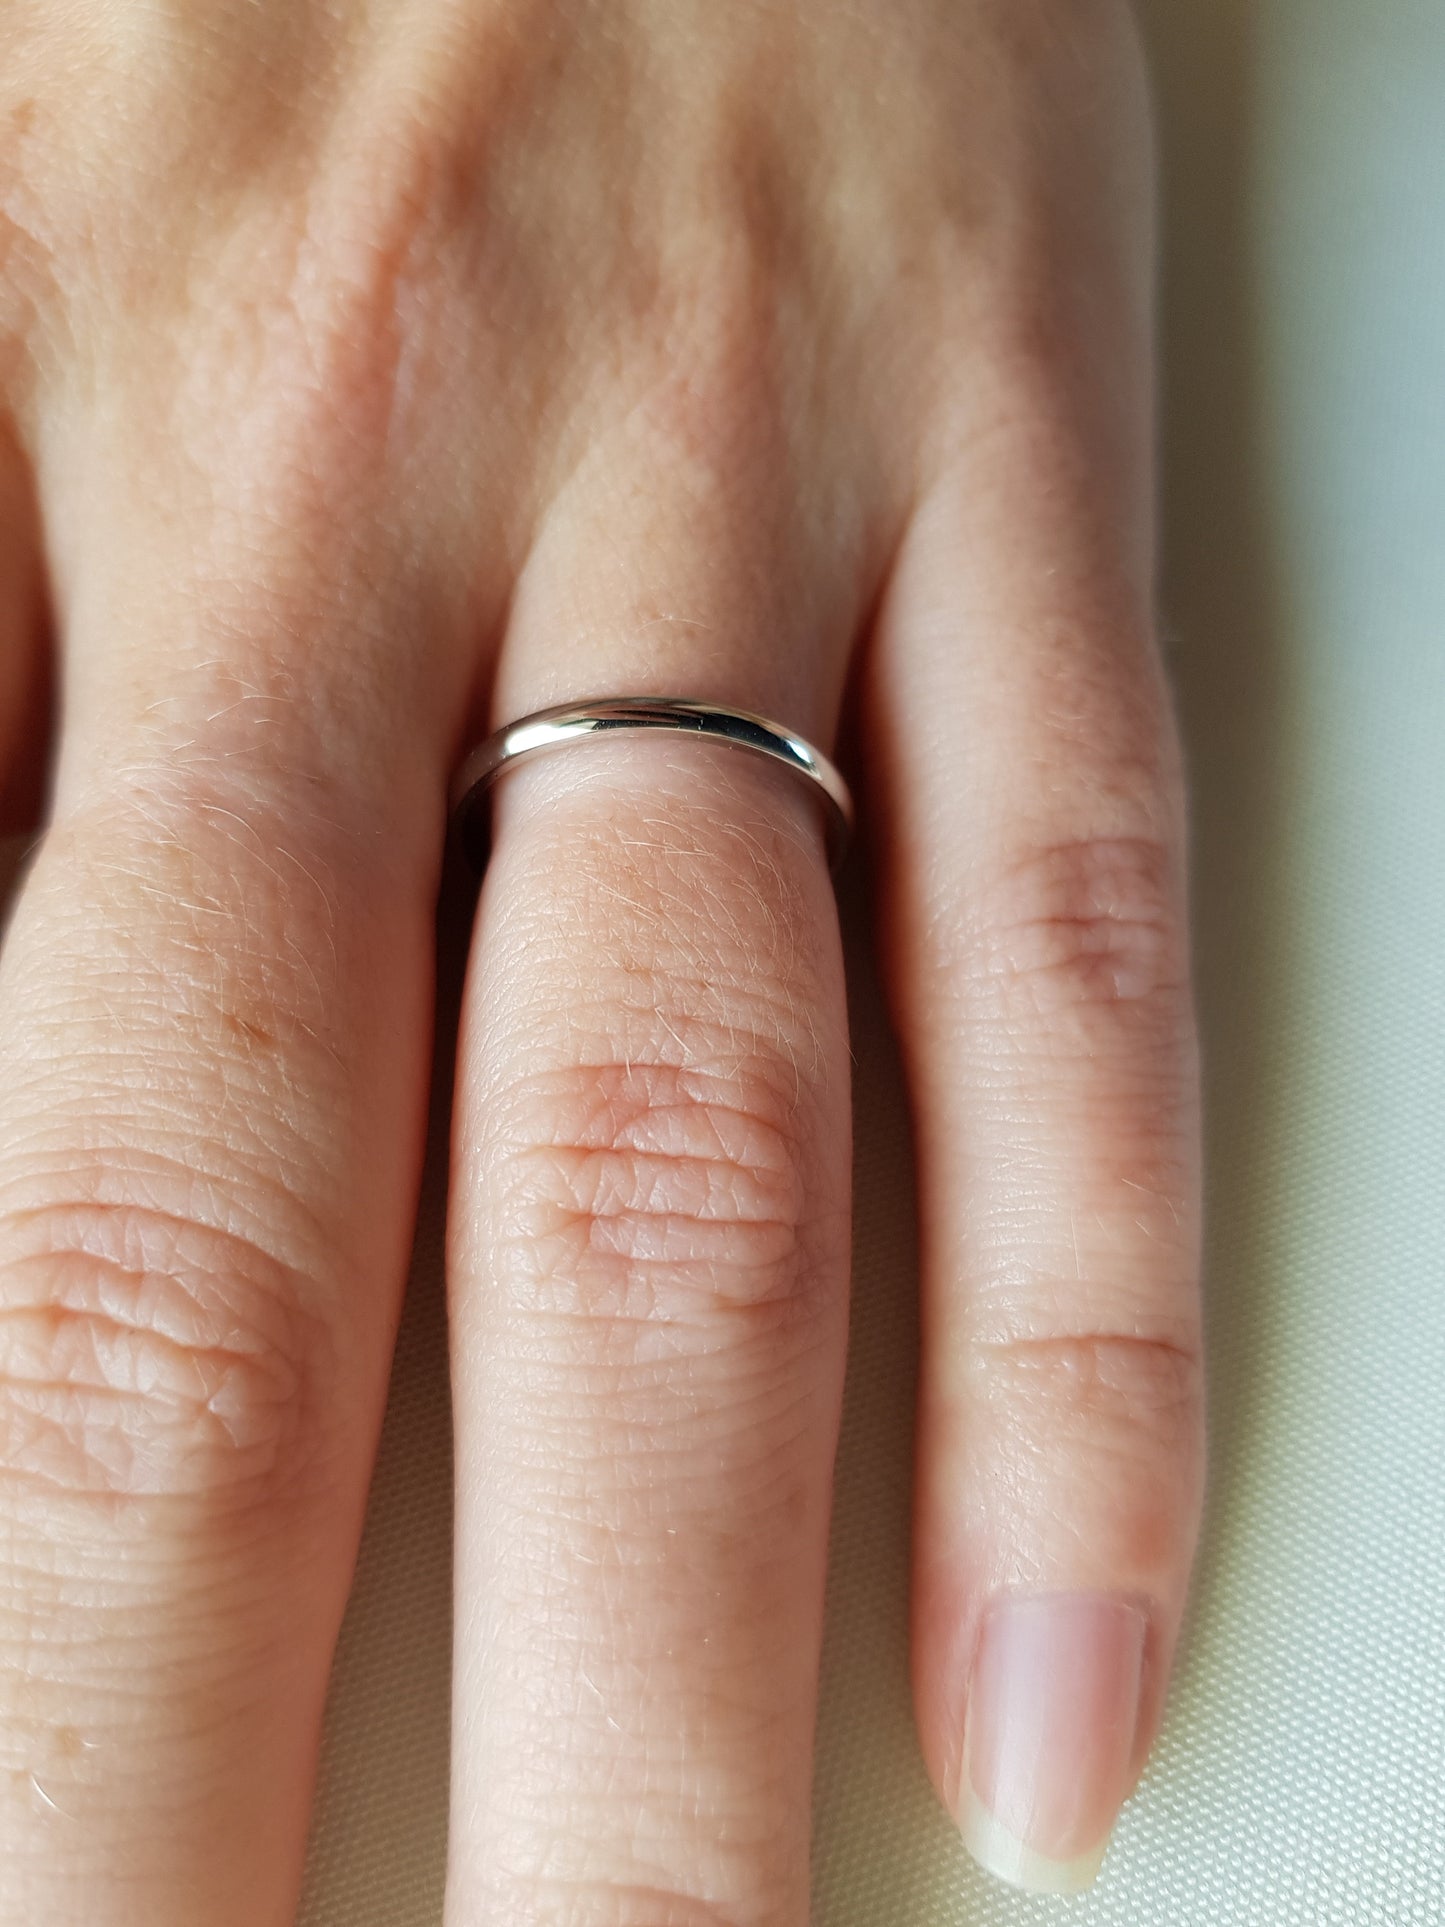 2mm Titanium Comfort Fit / Court Shape  Plain band Wedding Ring